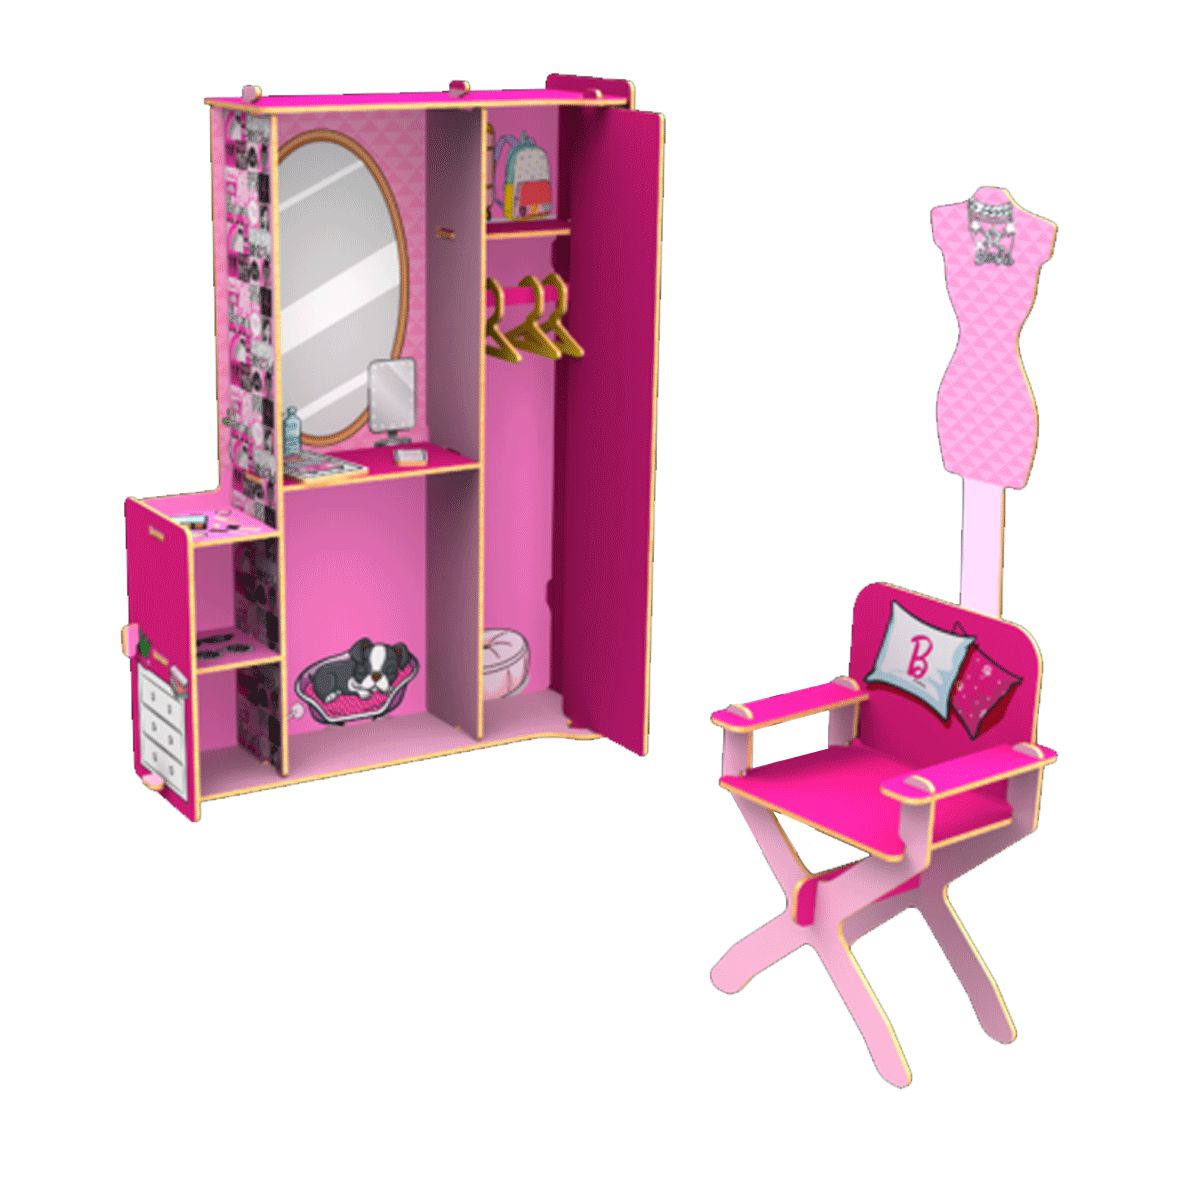 Playset Closet Da Barbie Xalingo Brinquedo Infantil - Loja Zuza